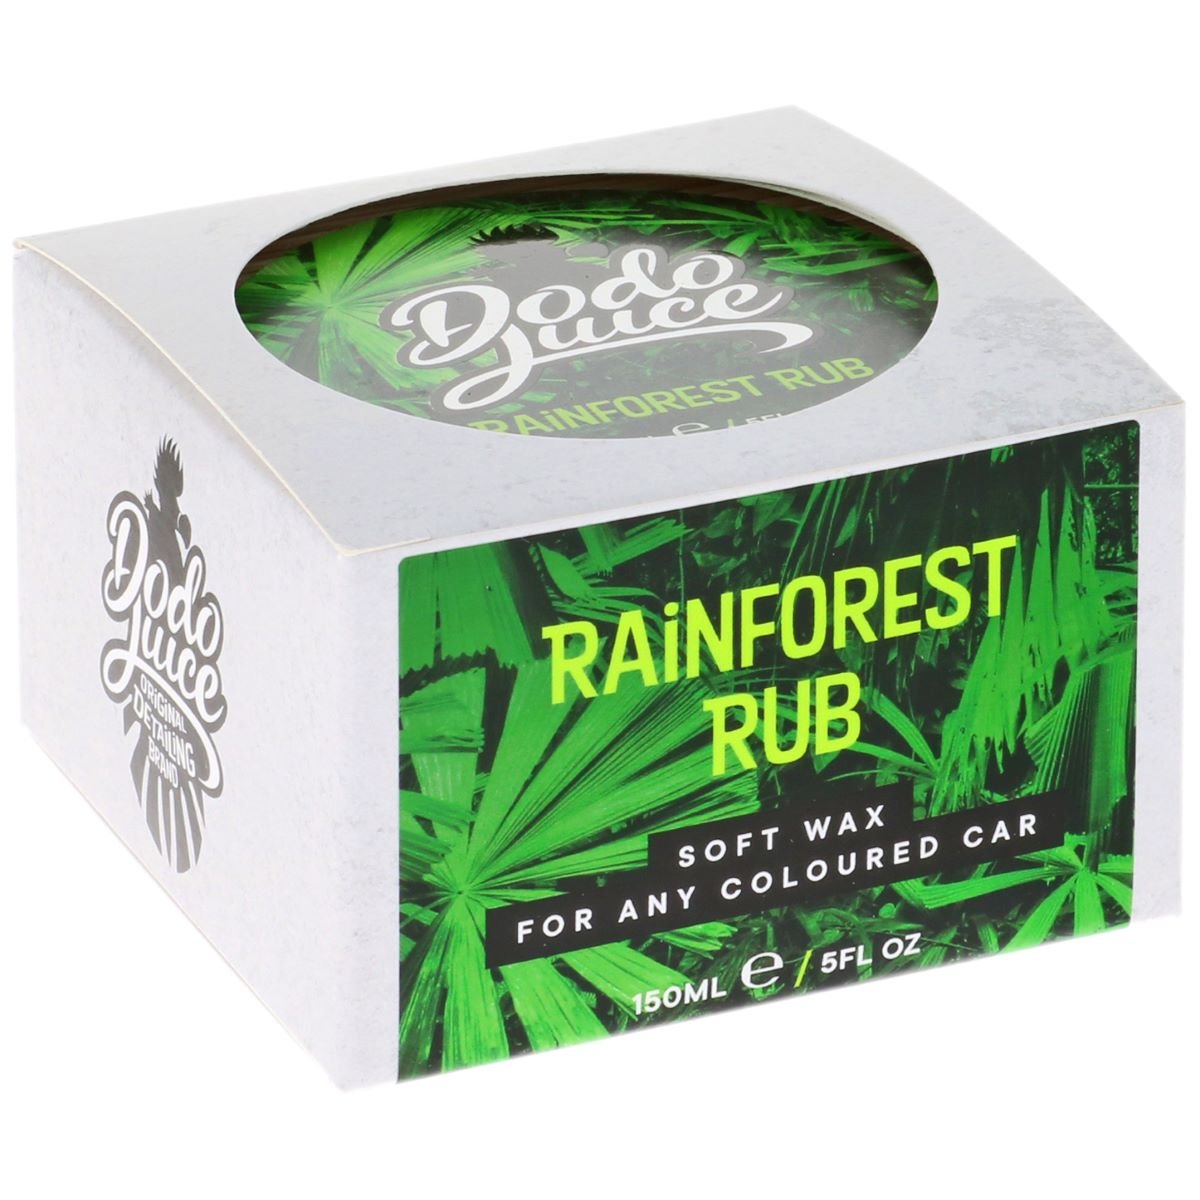 Rainforest Rub  soft wax for any coloured car - 150ml